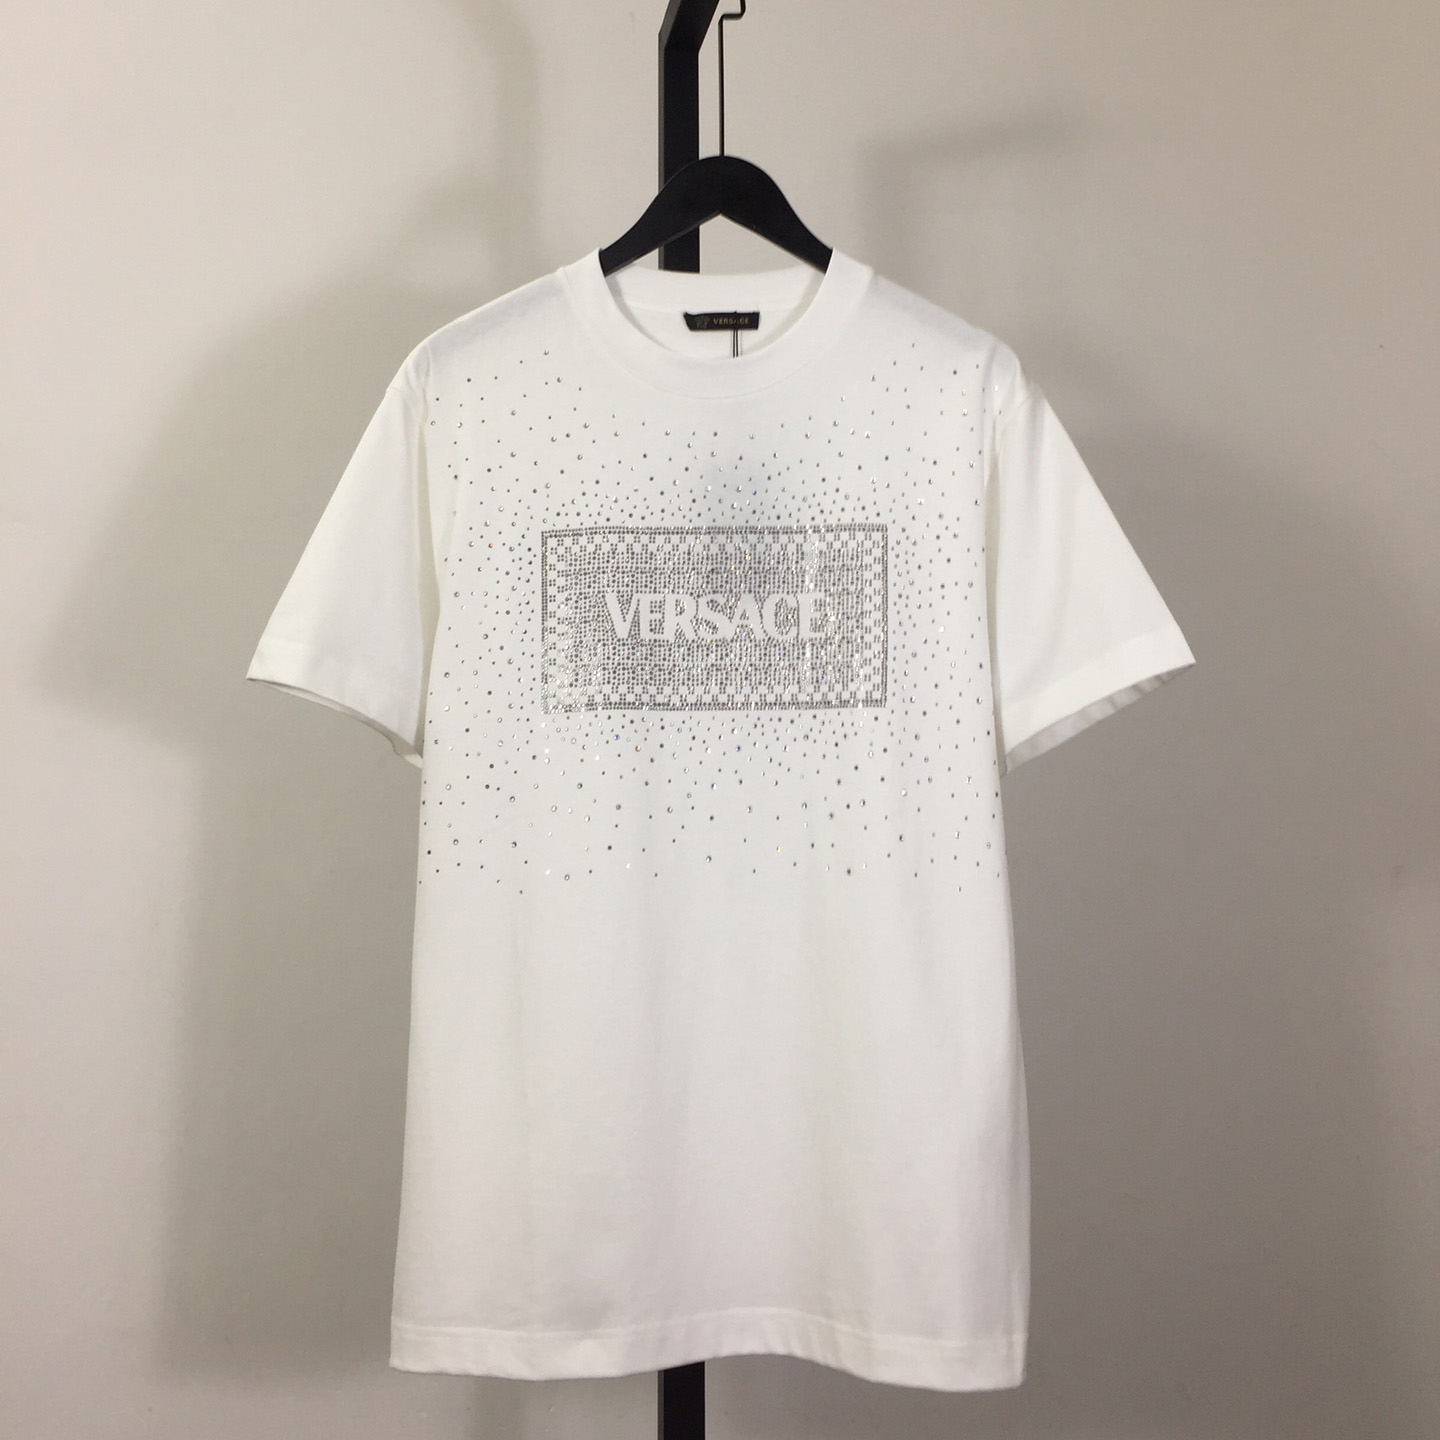 Versace Logo Cotton T-shirt - PerfectKickZ